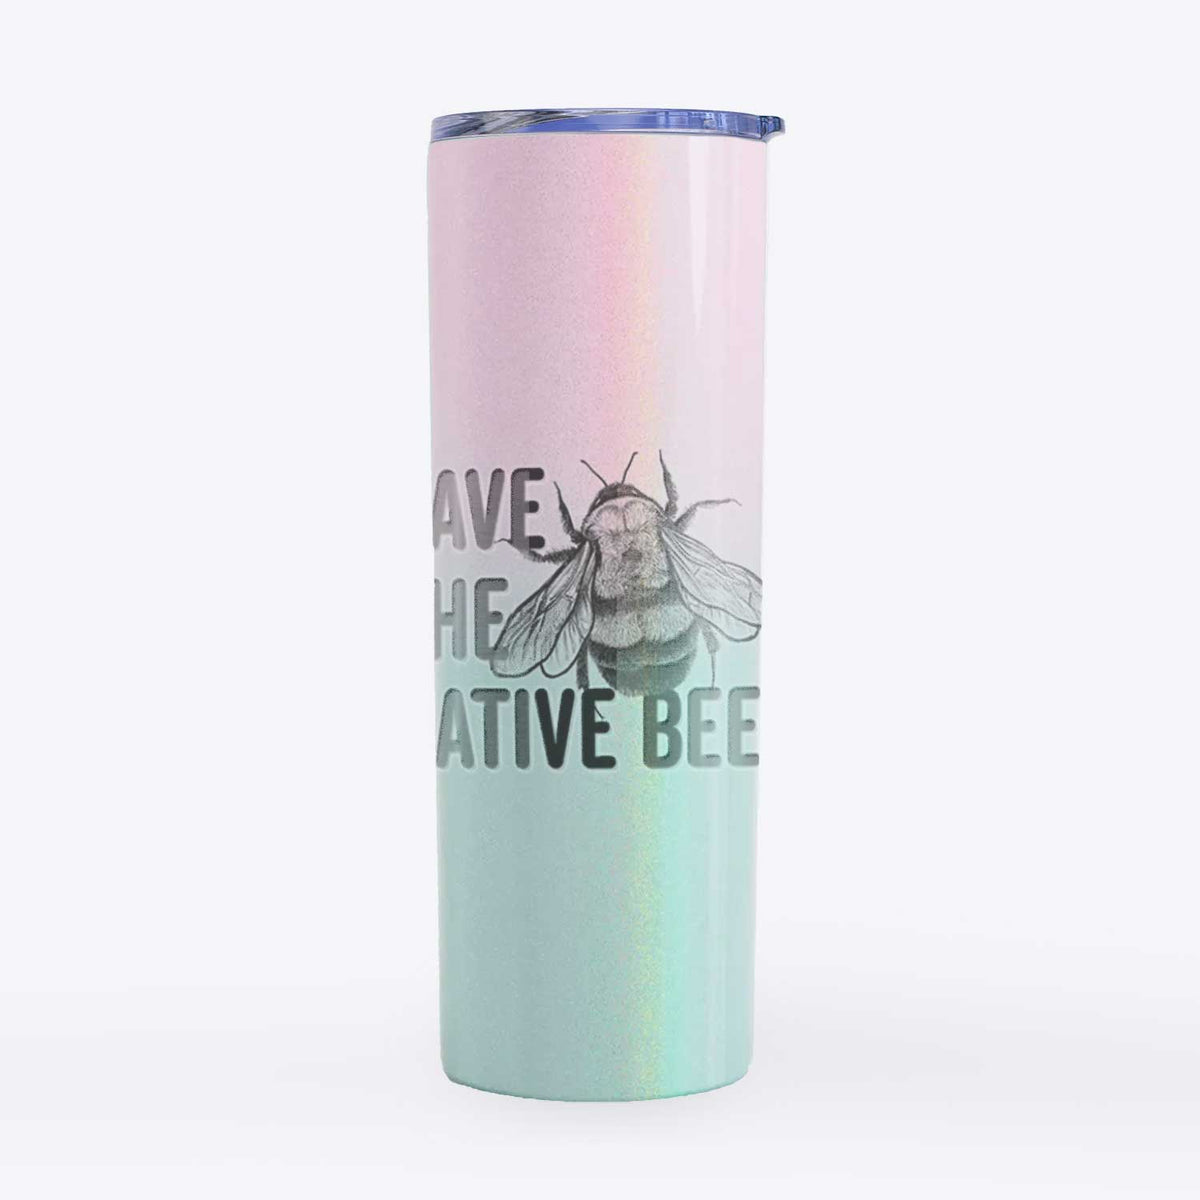 Save the Native Bees - 20oz Skinny Tumbler